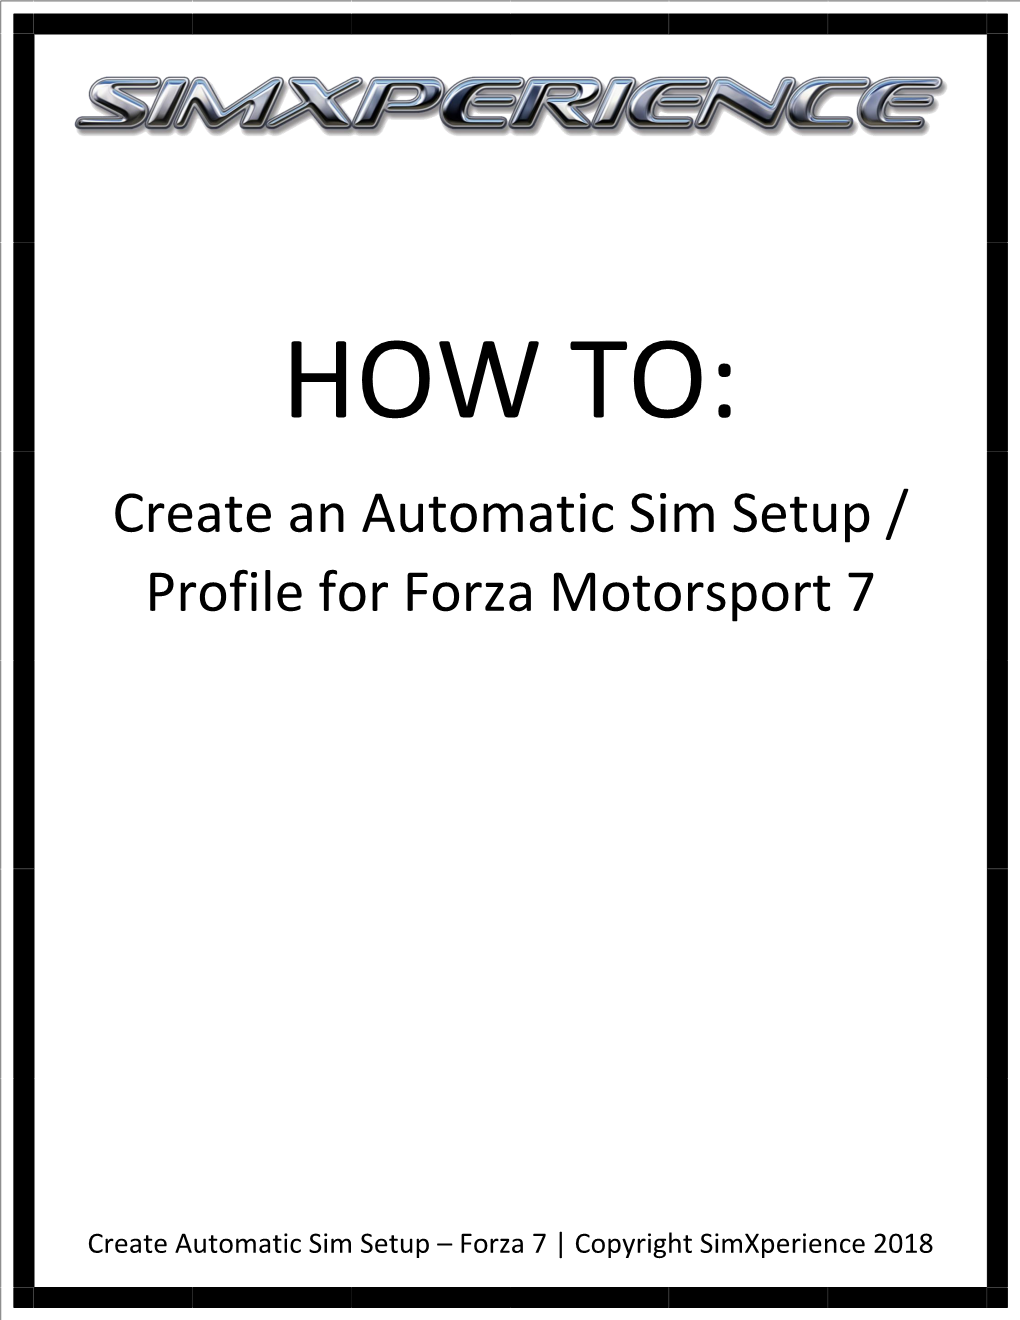 Create an Automatic Sim Setup / Profile for Forza Motorsport 7